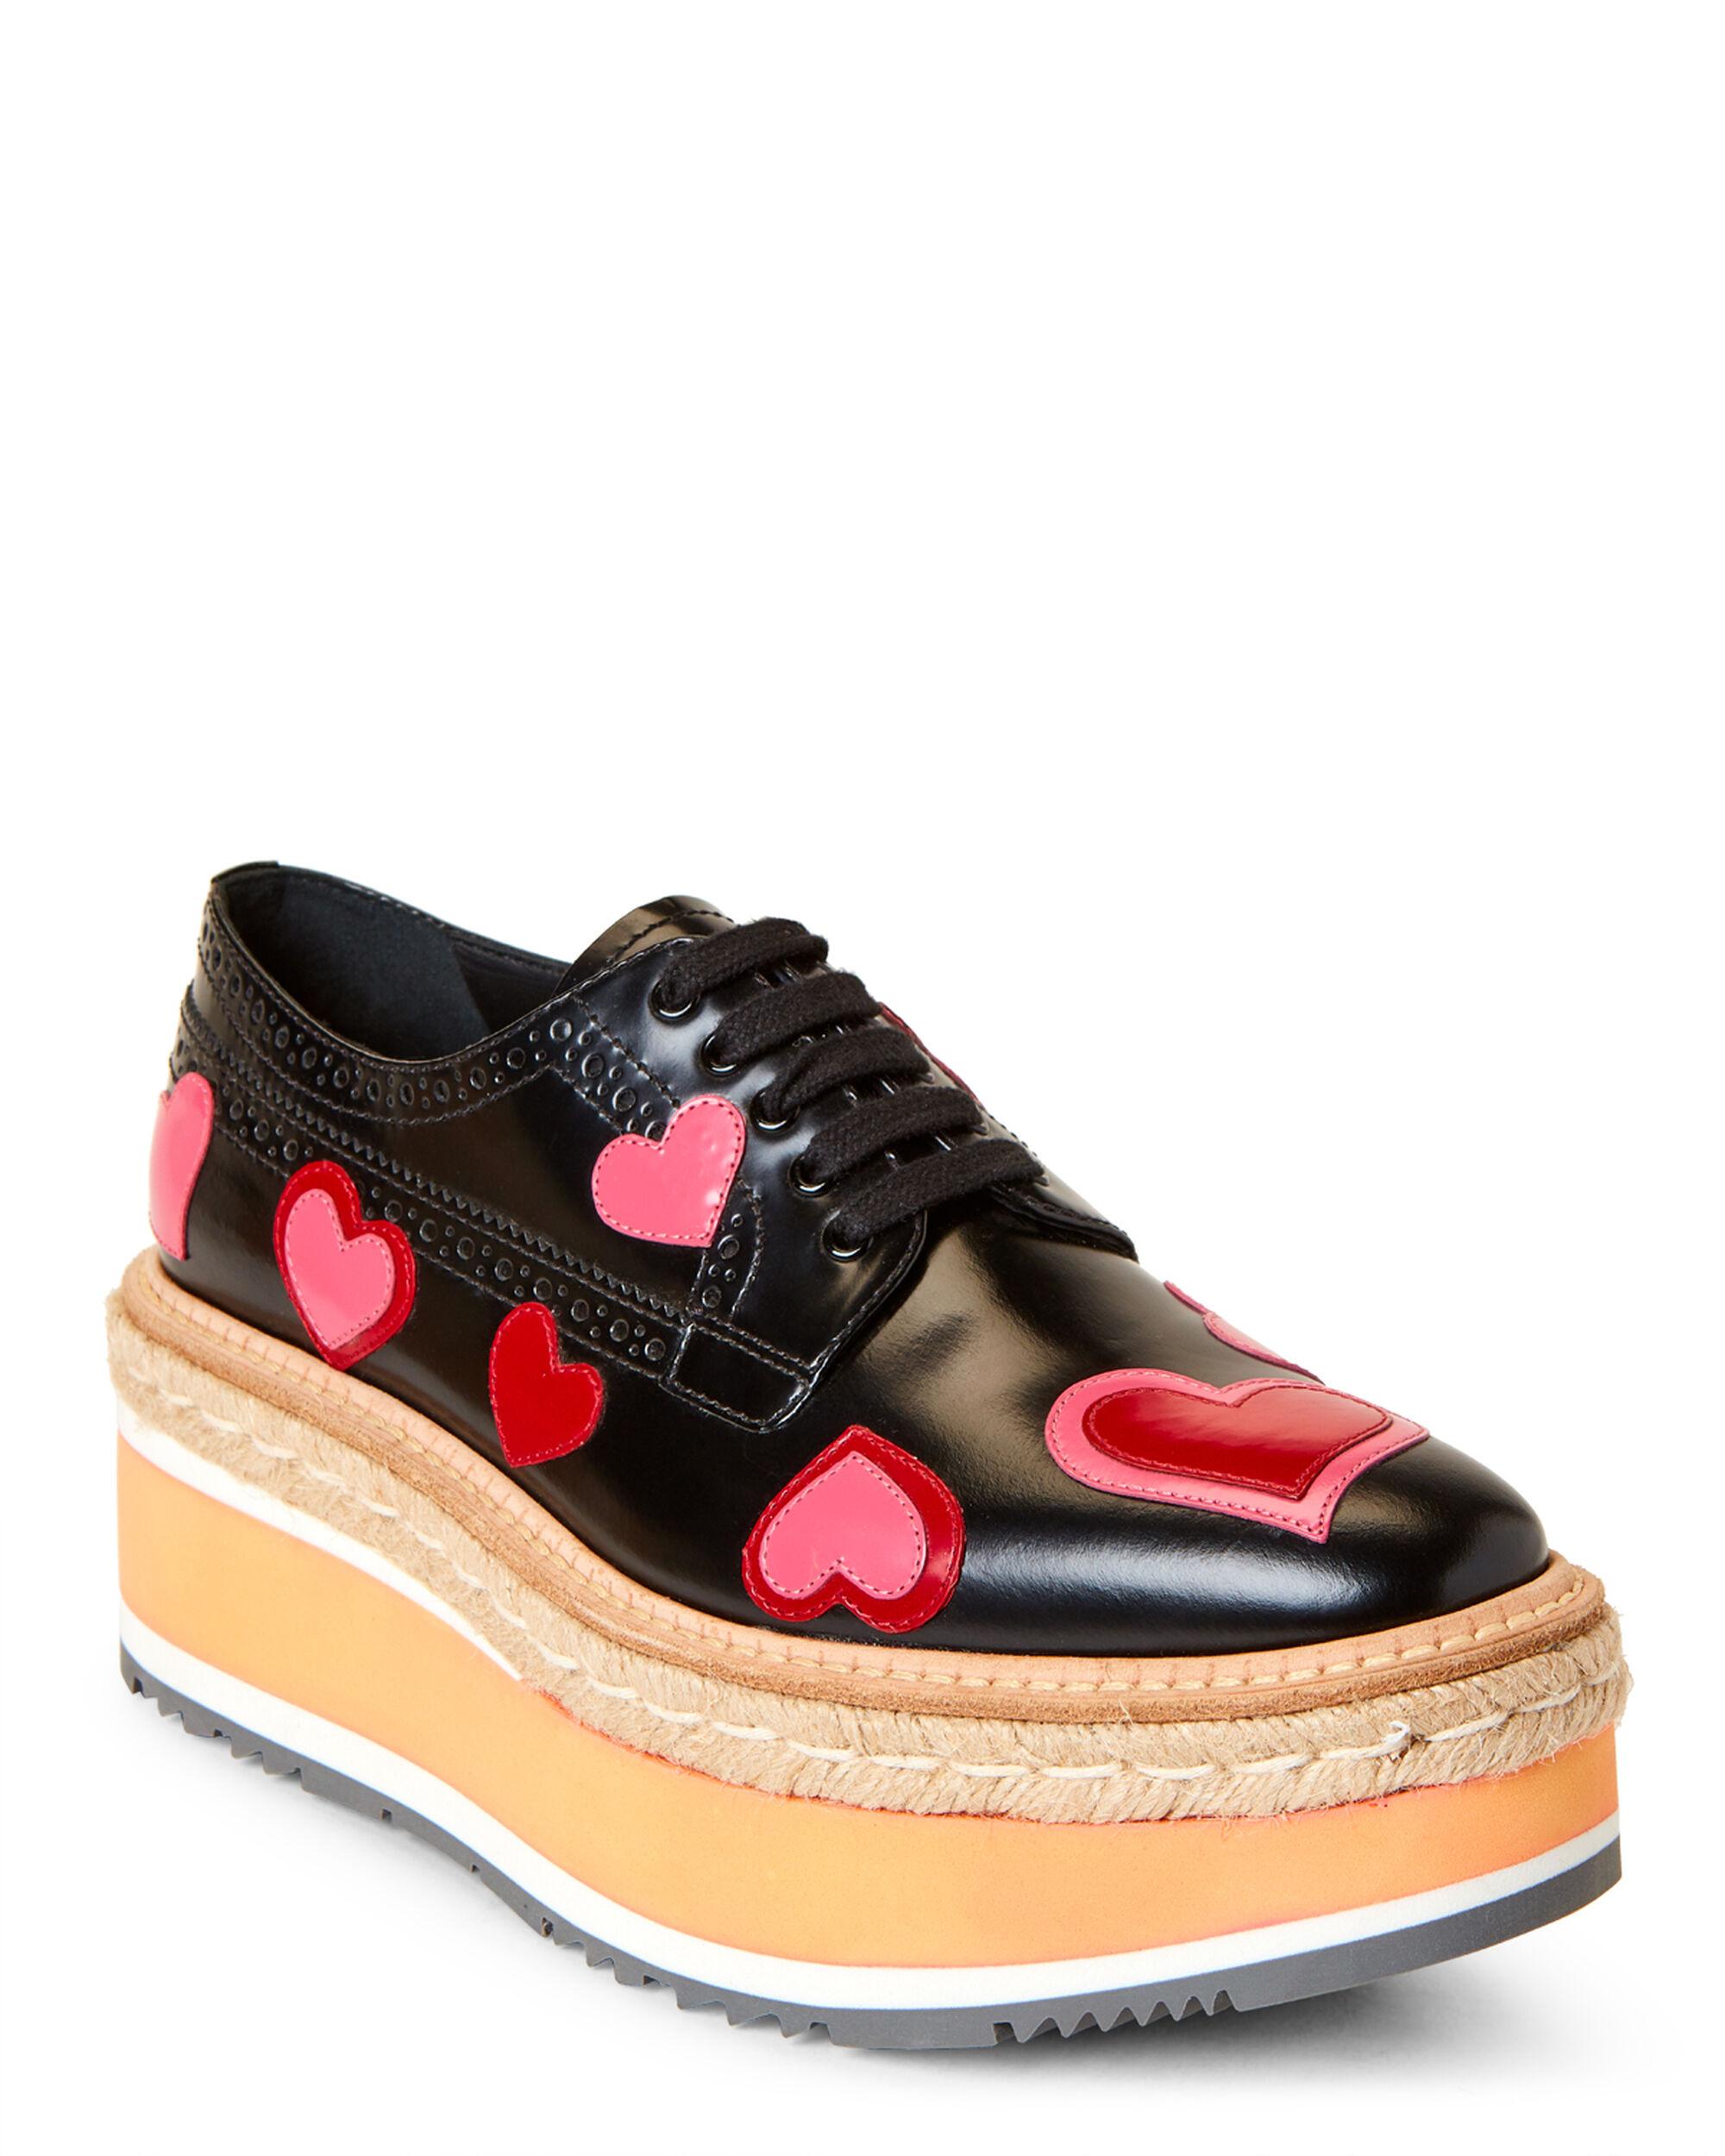 prada heart shoes